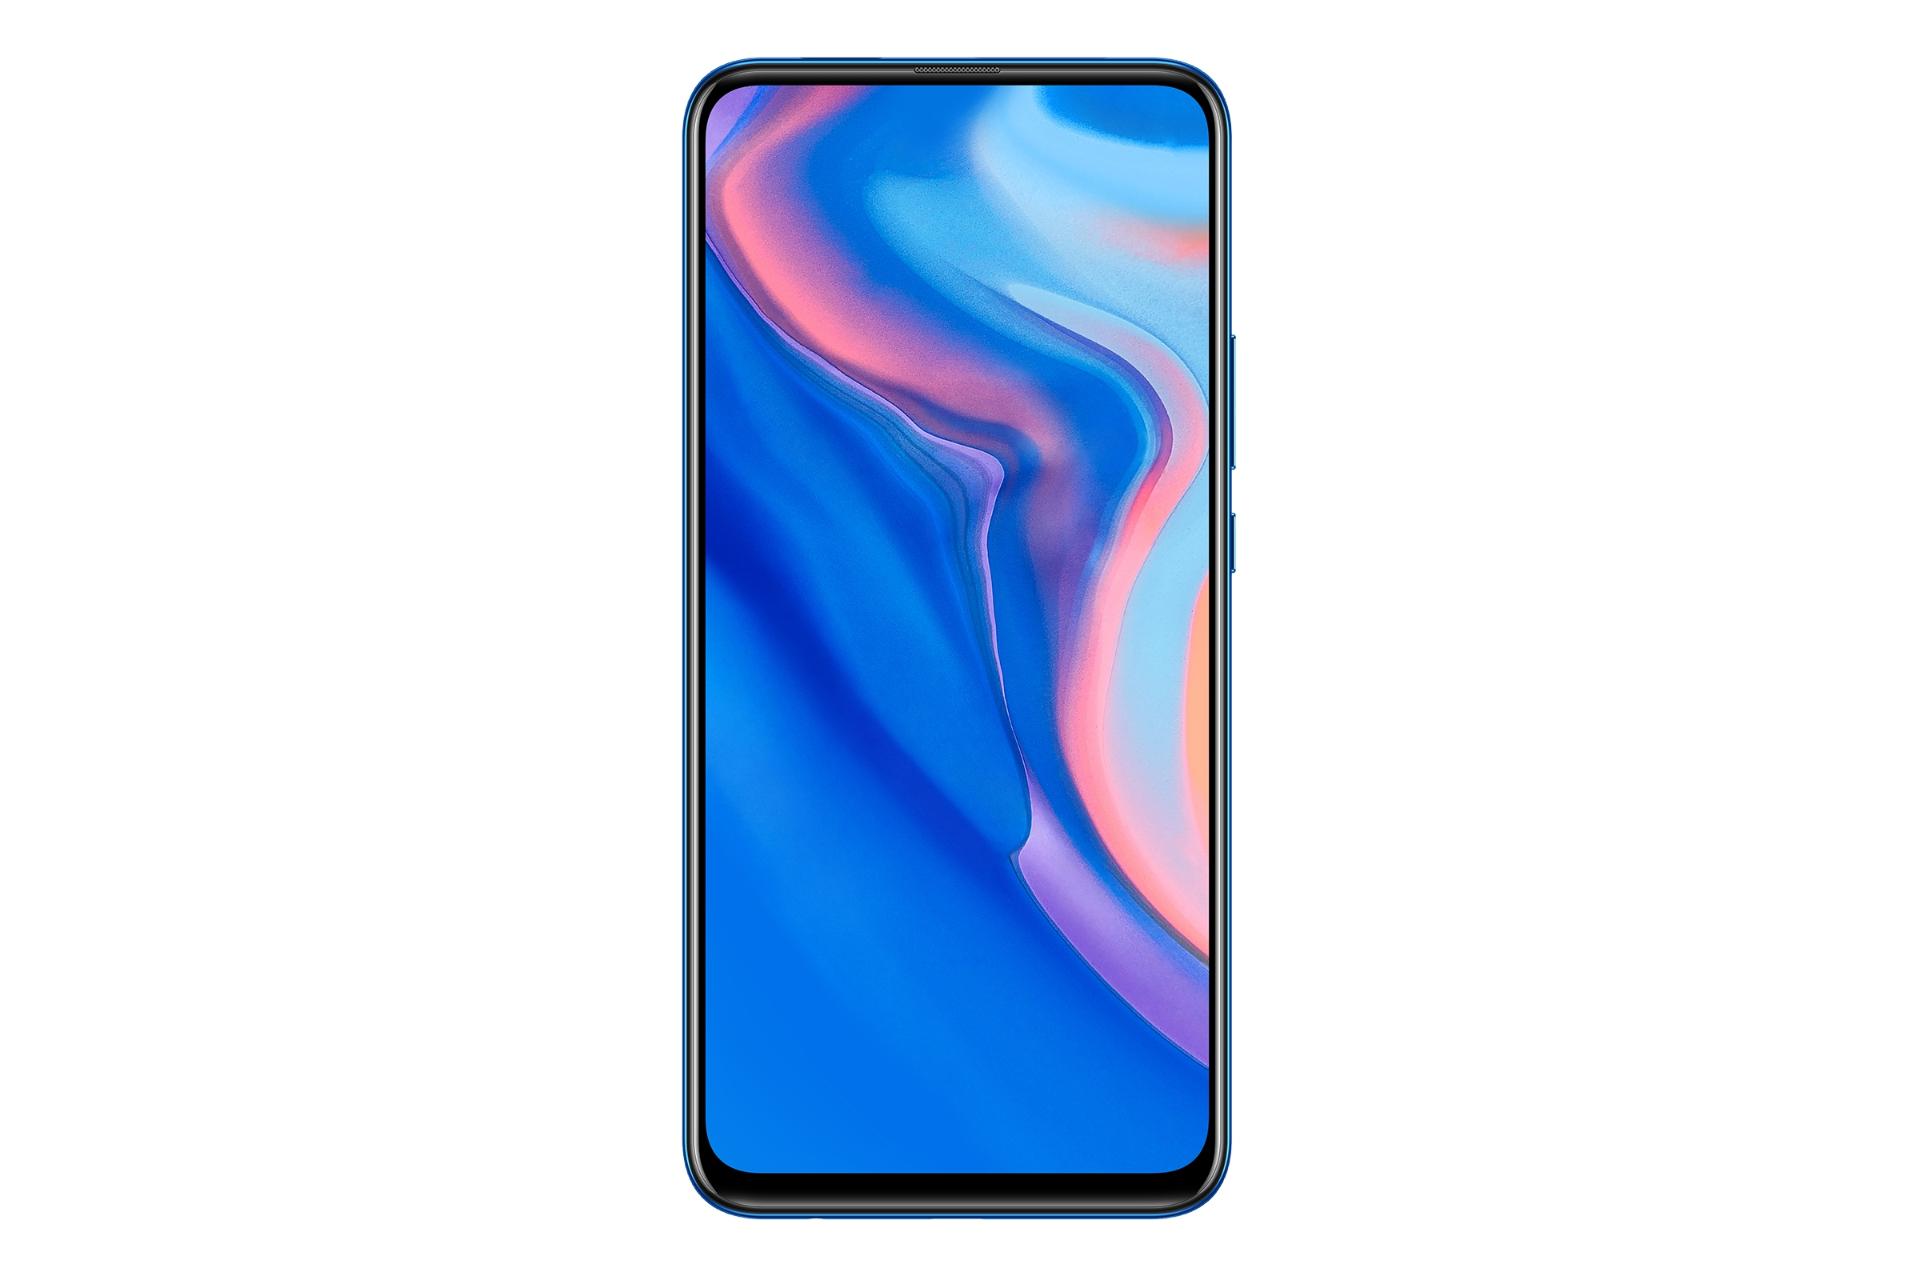 پنل جلو گوشی موبایل Y9 پرایم 2019 هواوی Huawei Y9 Prime 2019 آبی